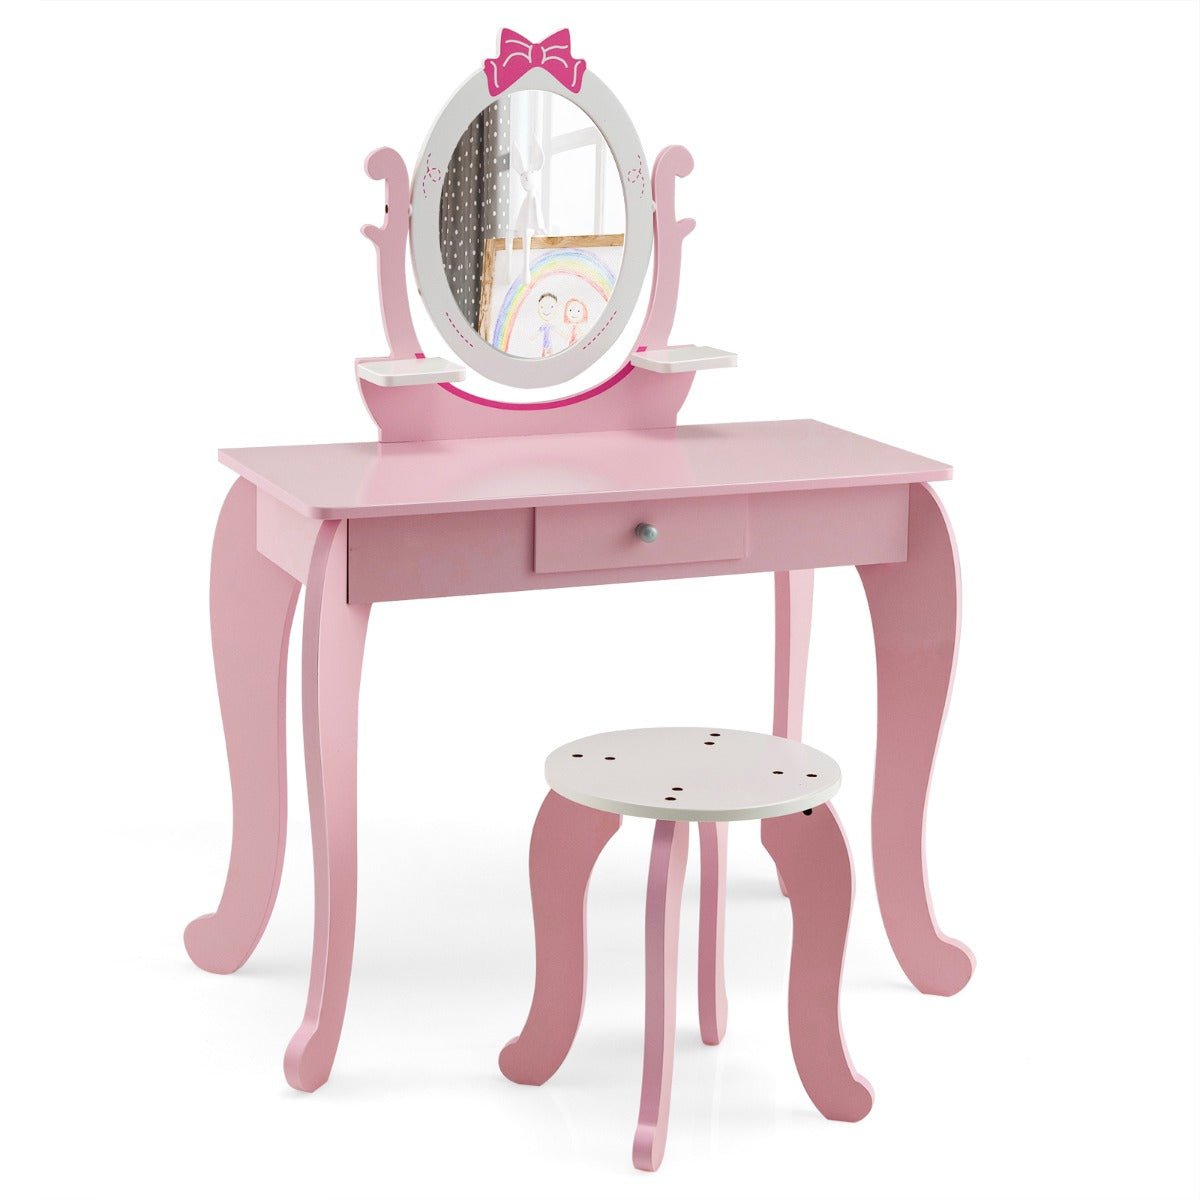 Kid Vanity Set: Table, Stool, and Adjustable Mirror for Imaginative Play